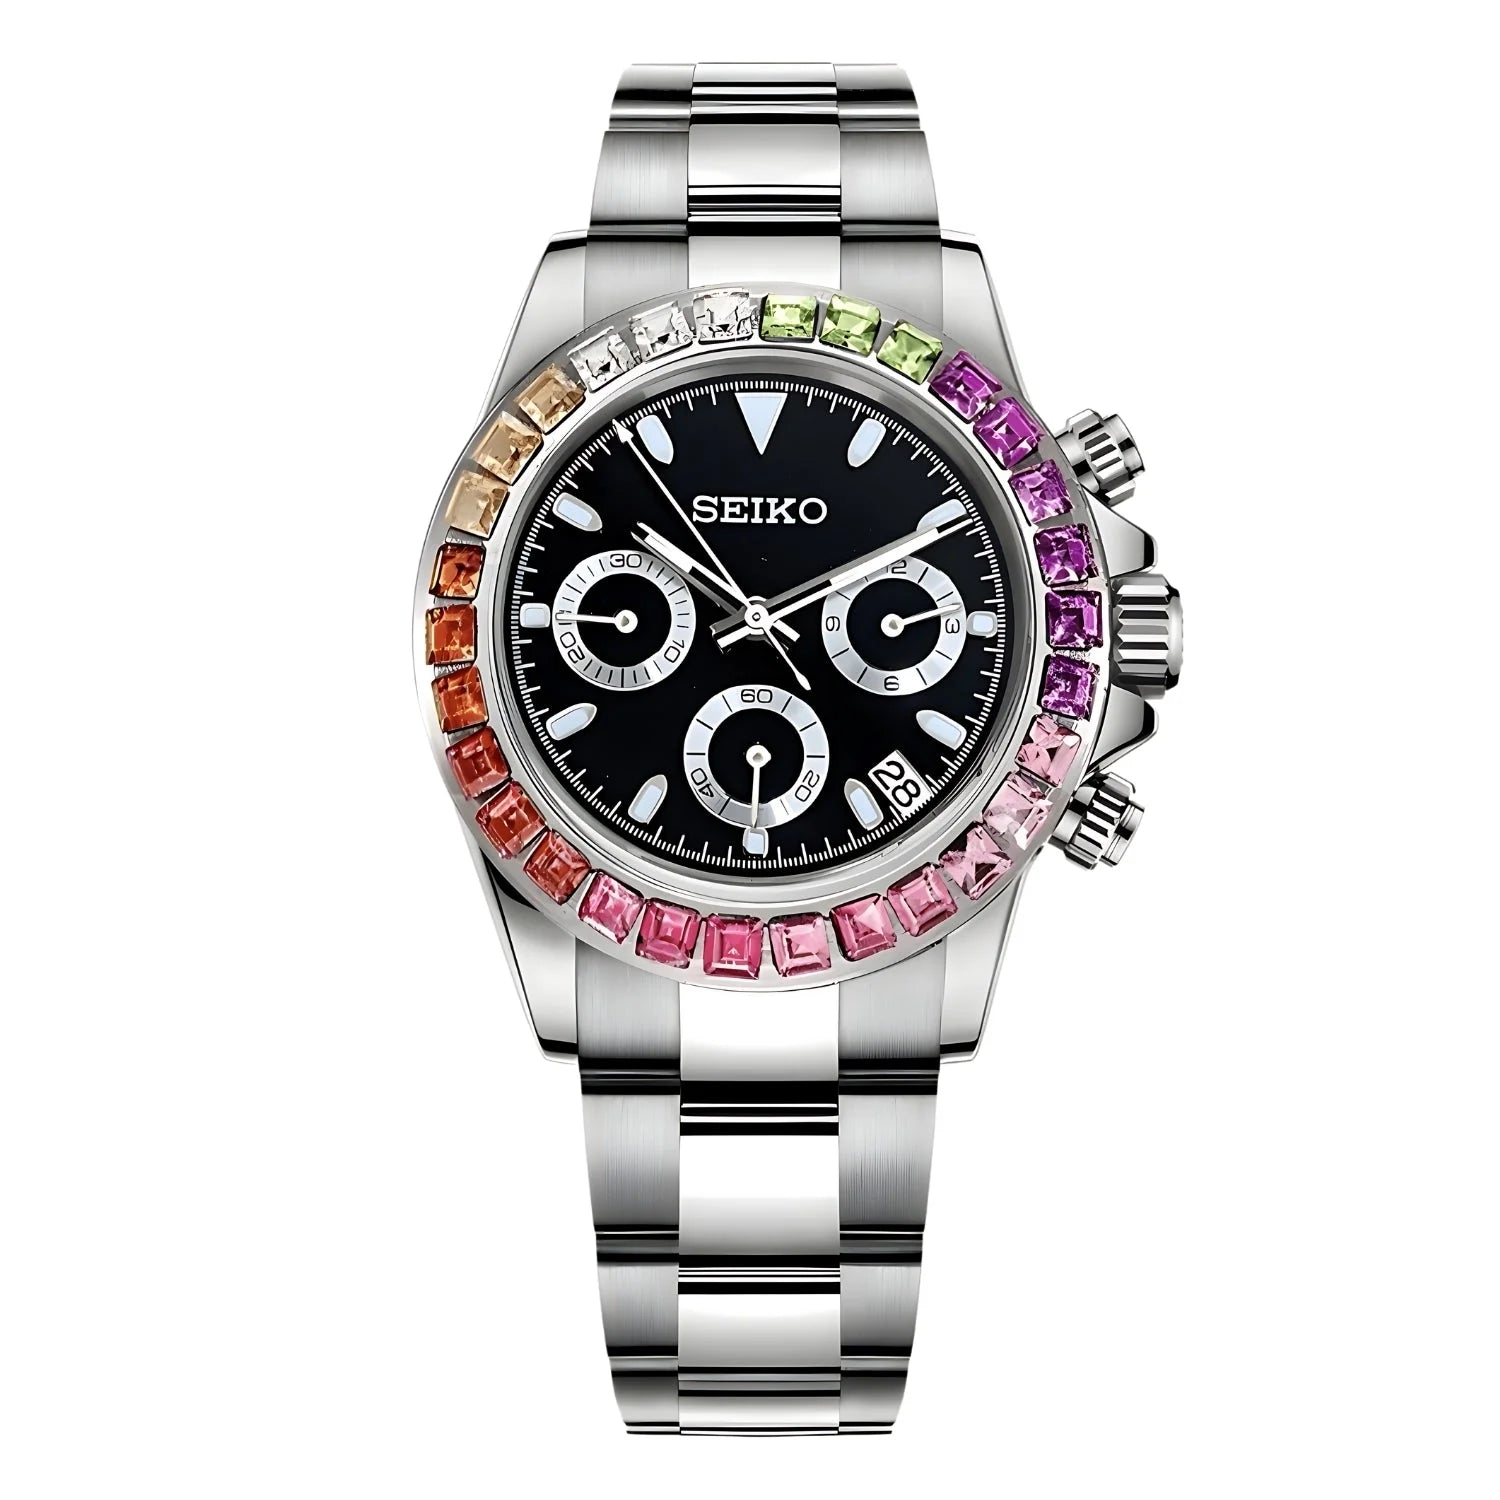 Seiko Mod Daytona - Seiko Wristwatch With Rainbow Gemstone Bezel And Chronograph Subdials